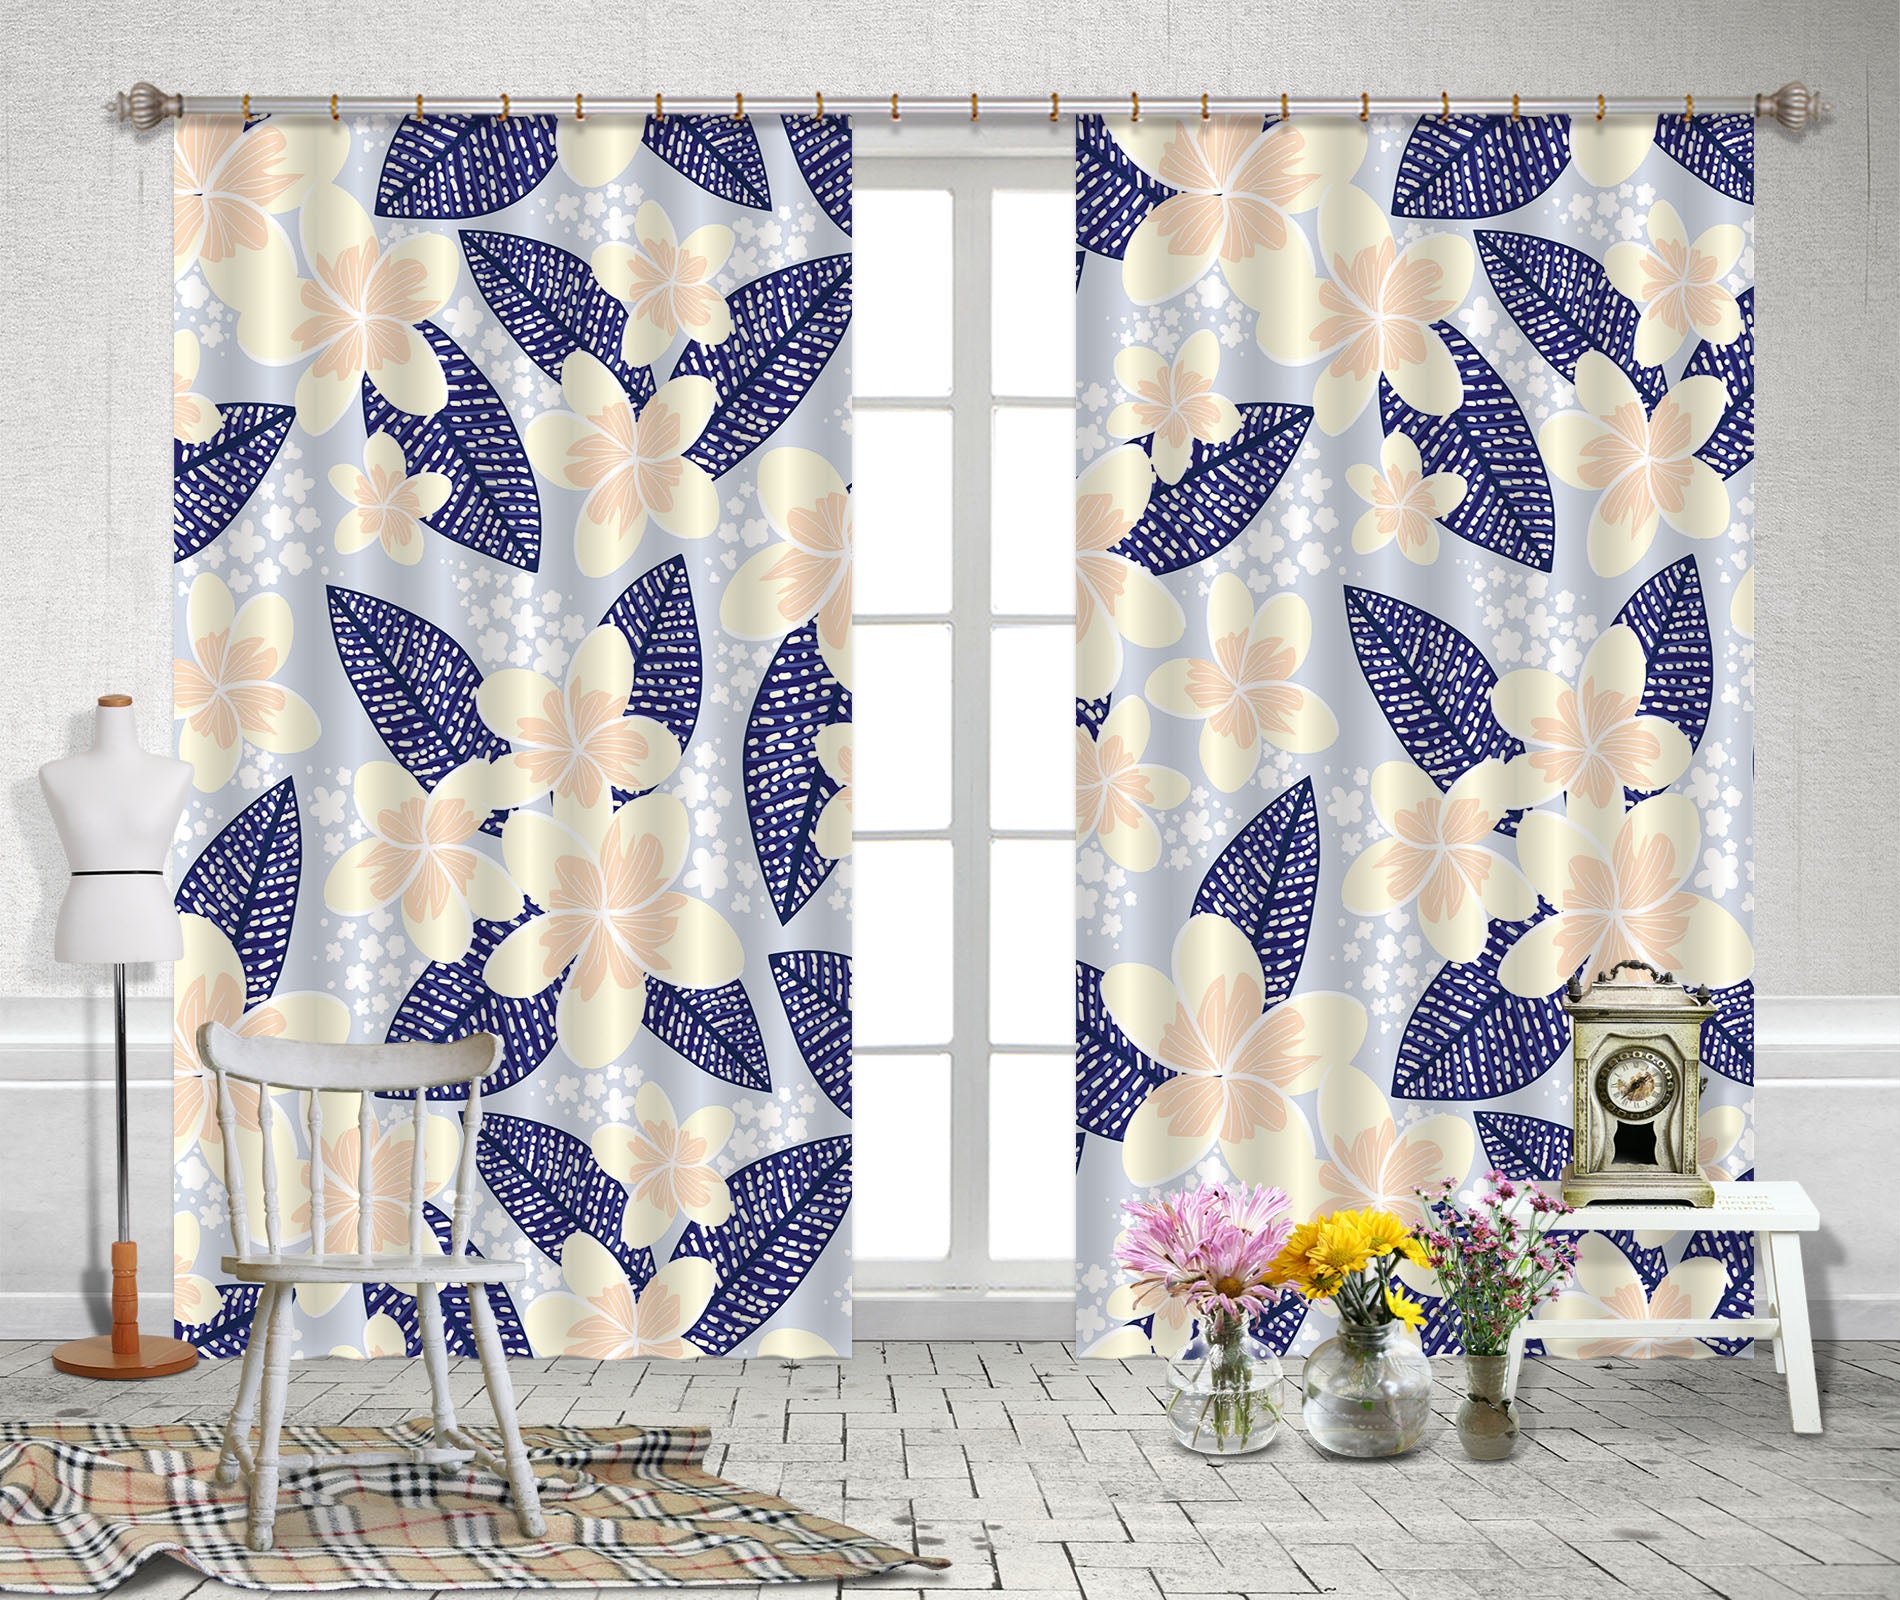 3D Flowers Leaves Pattern 11134 Kashmira Jayaprakash Curtain Curtains Drapes